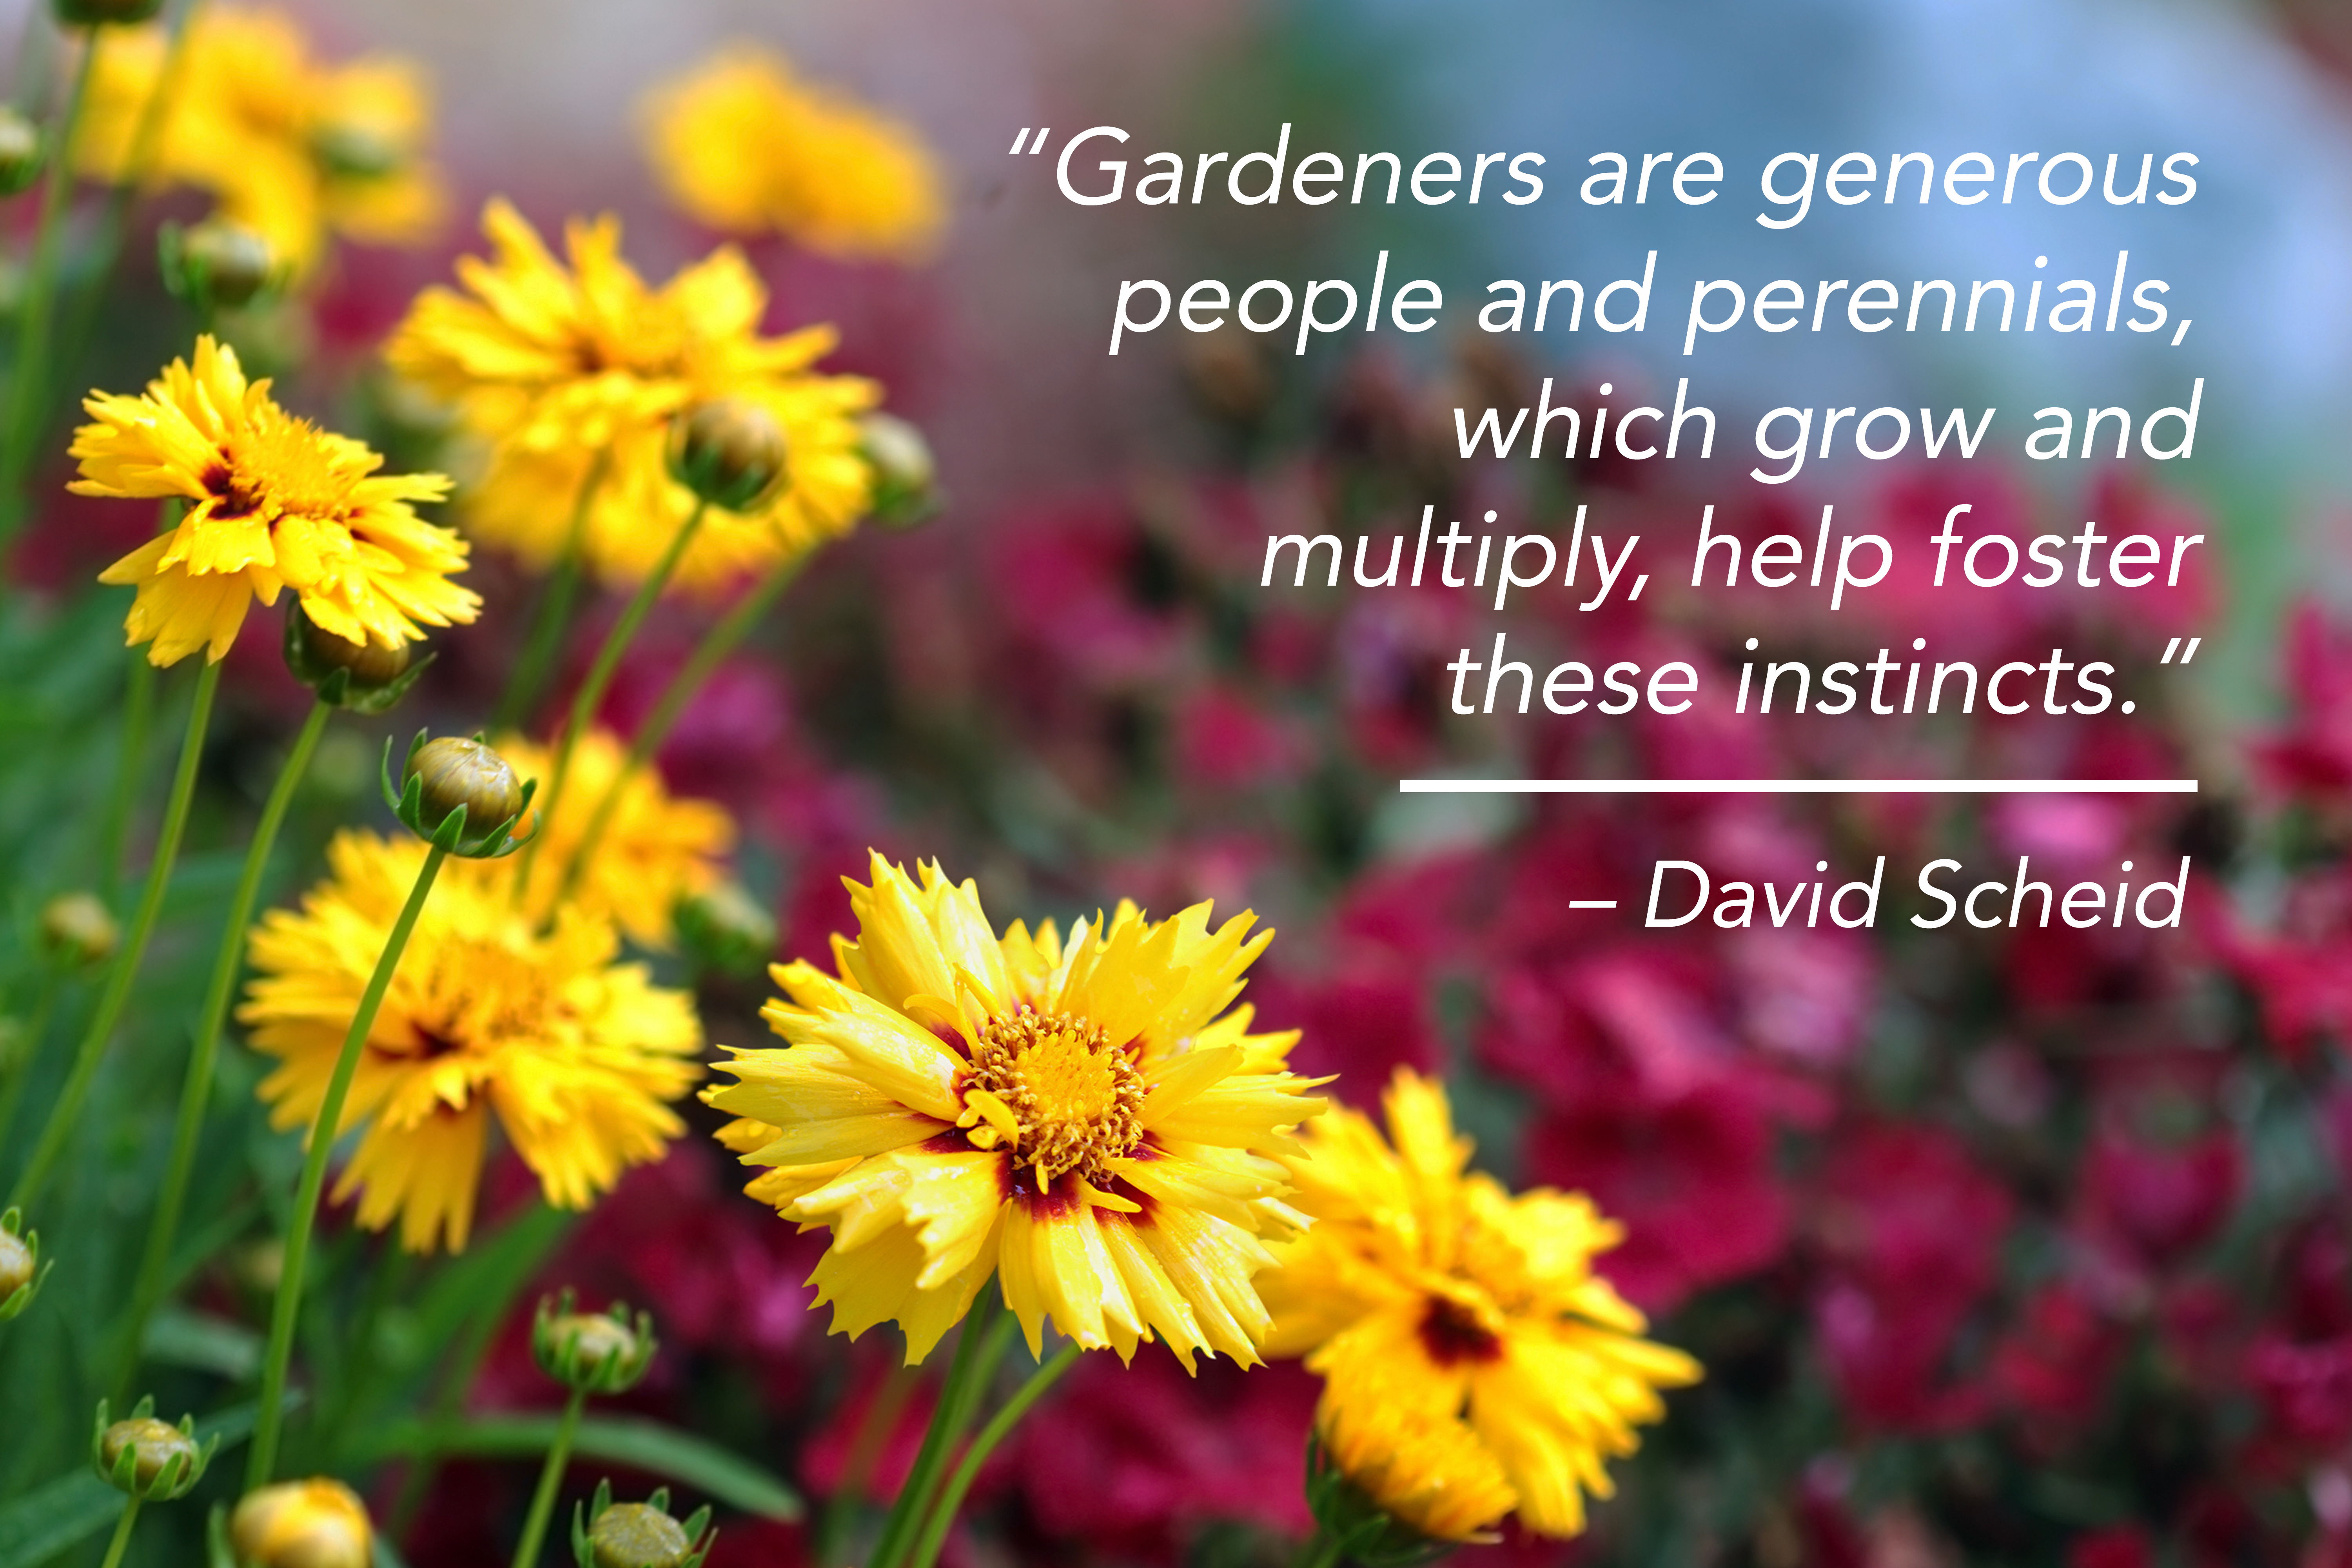 Gardening Quotes